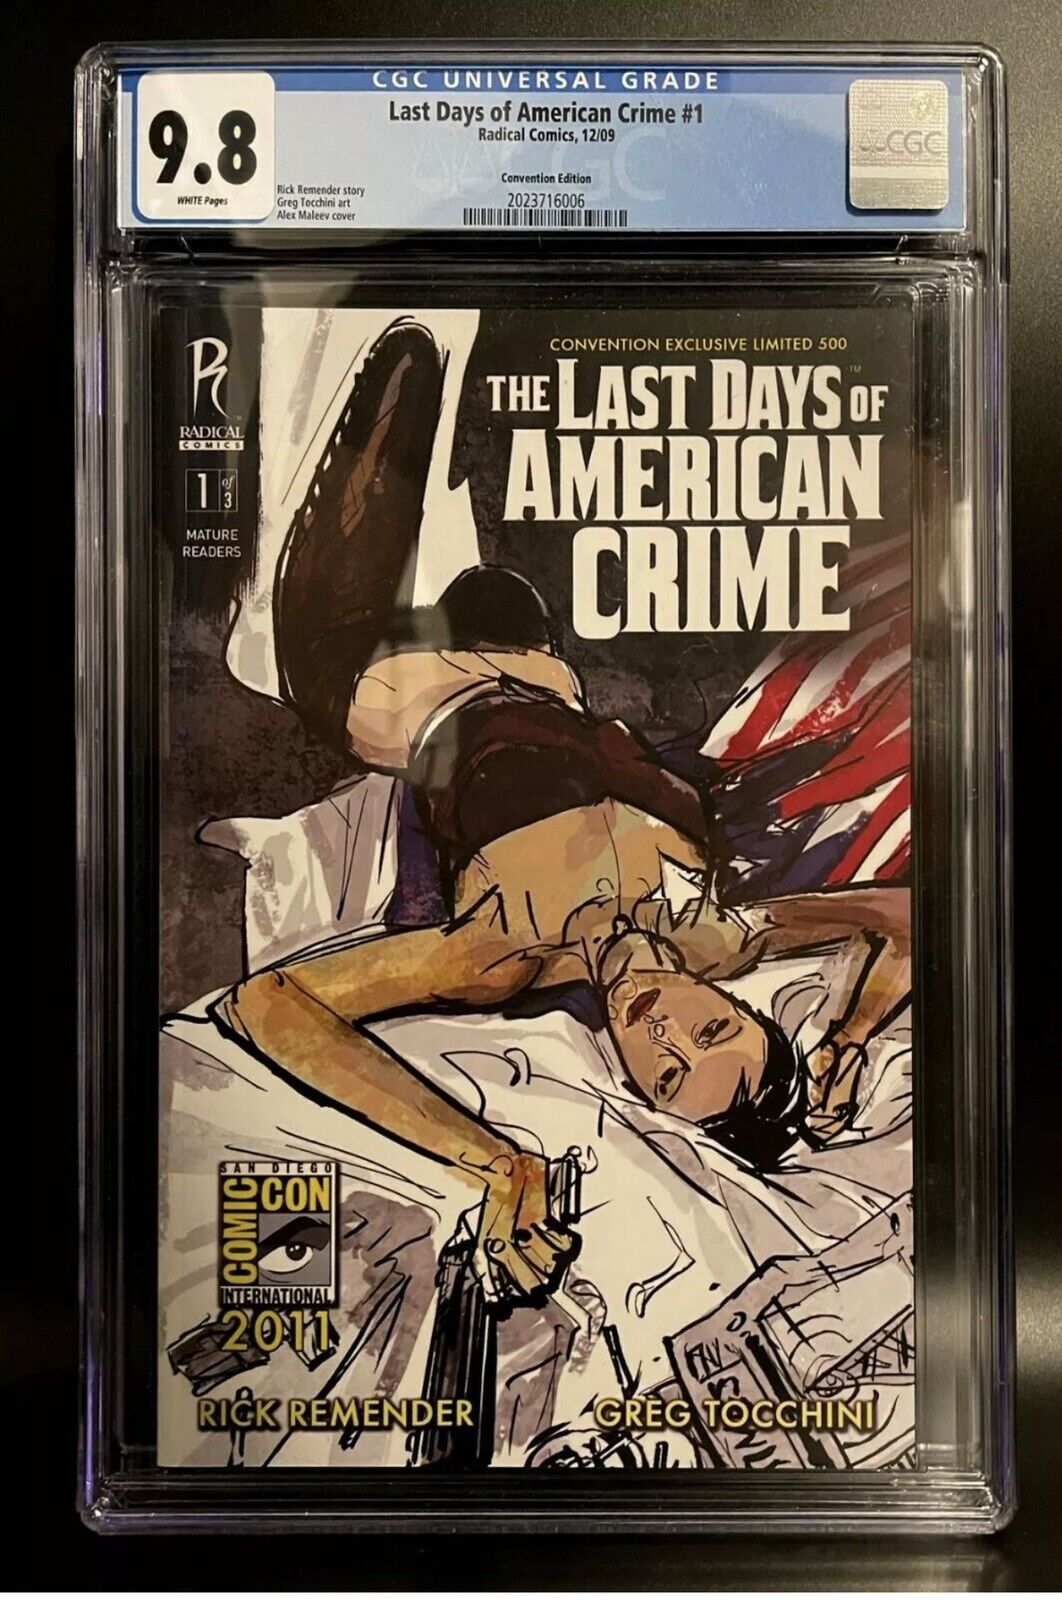 THE LAST DAYS OF AMERICAN CRIME #1 CGC 9.8 SDCC Variant Ltd to 500 Copies Movie